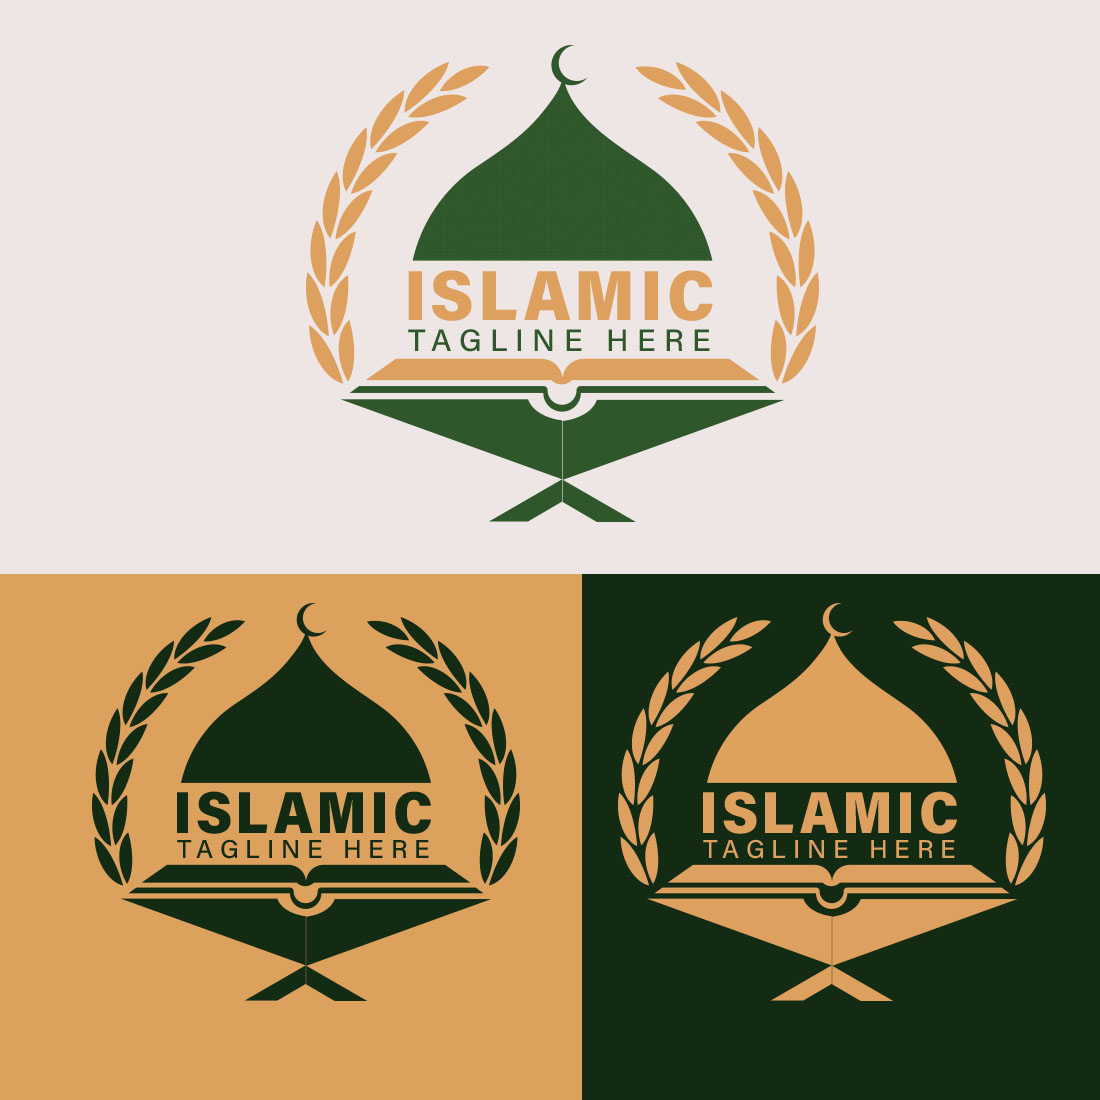 Eye-Catching Islamic Logos Designs cover image.